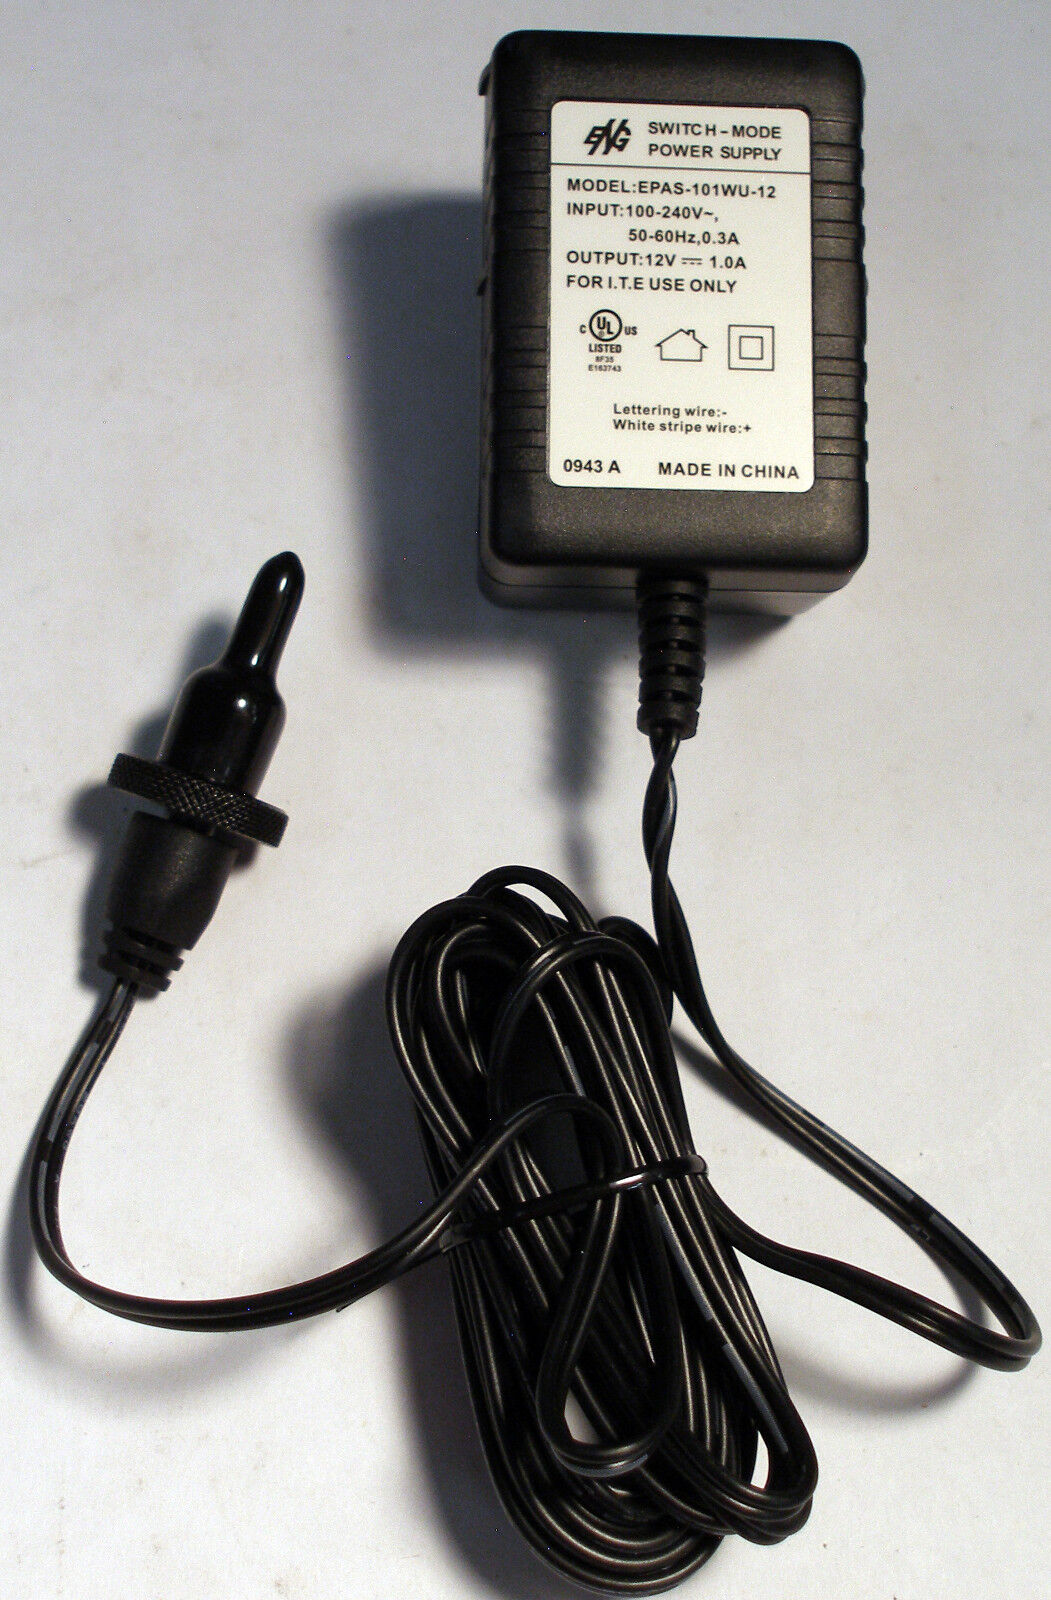 DAGR Defense Advanced GPS Receiver AC Power Adapter 987-4975-001, New